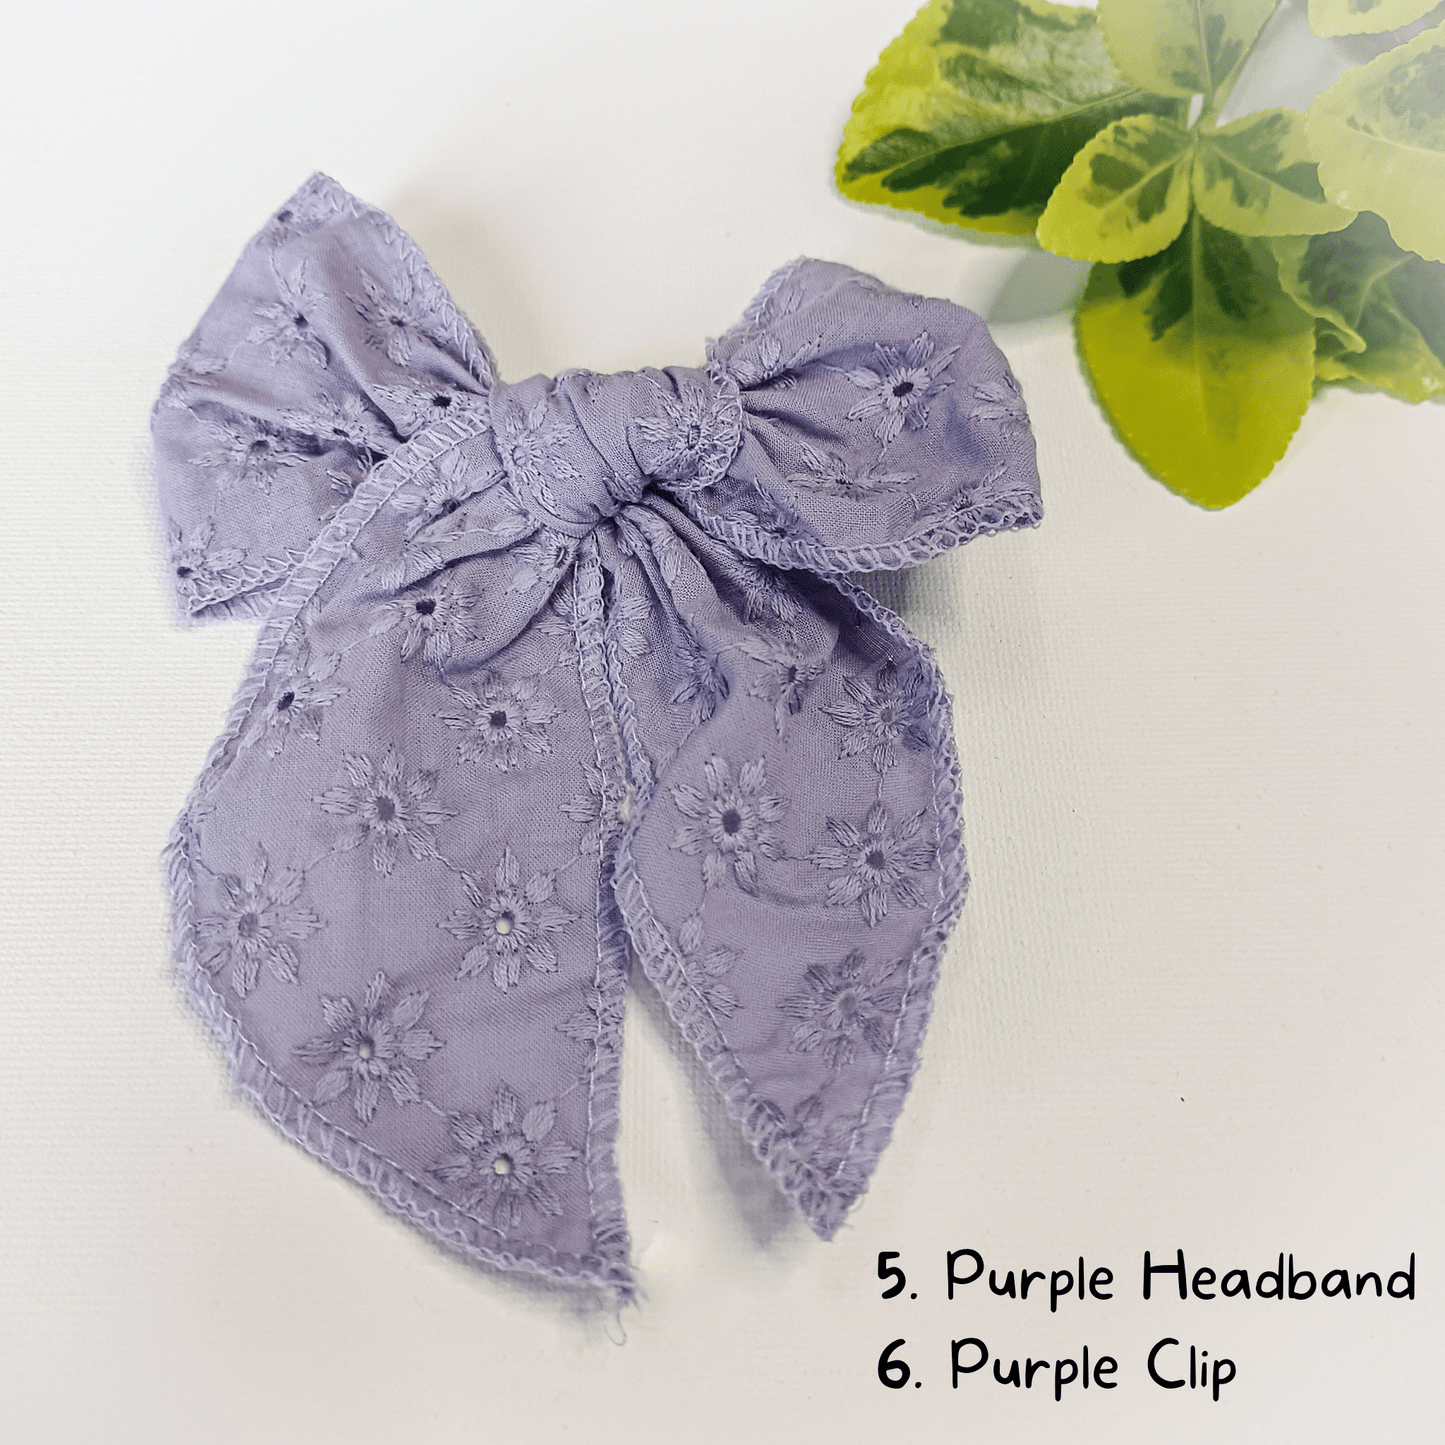 Sweet Little Duck Bow 5. Purple Headband Eyelet Cotton Bow 4.5 Inch - Choose Alligator Clip or Nude Nylon Headband